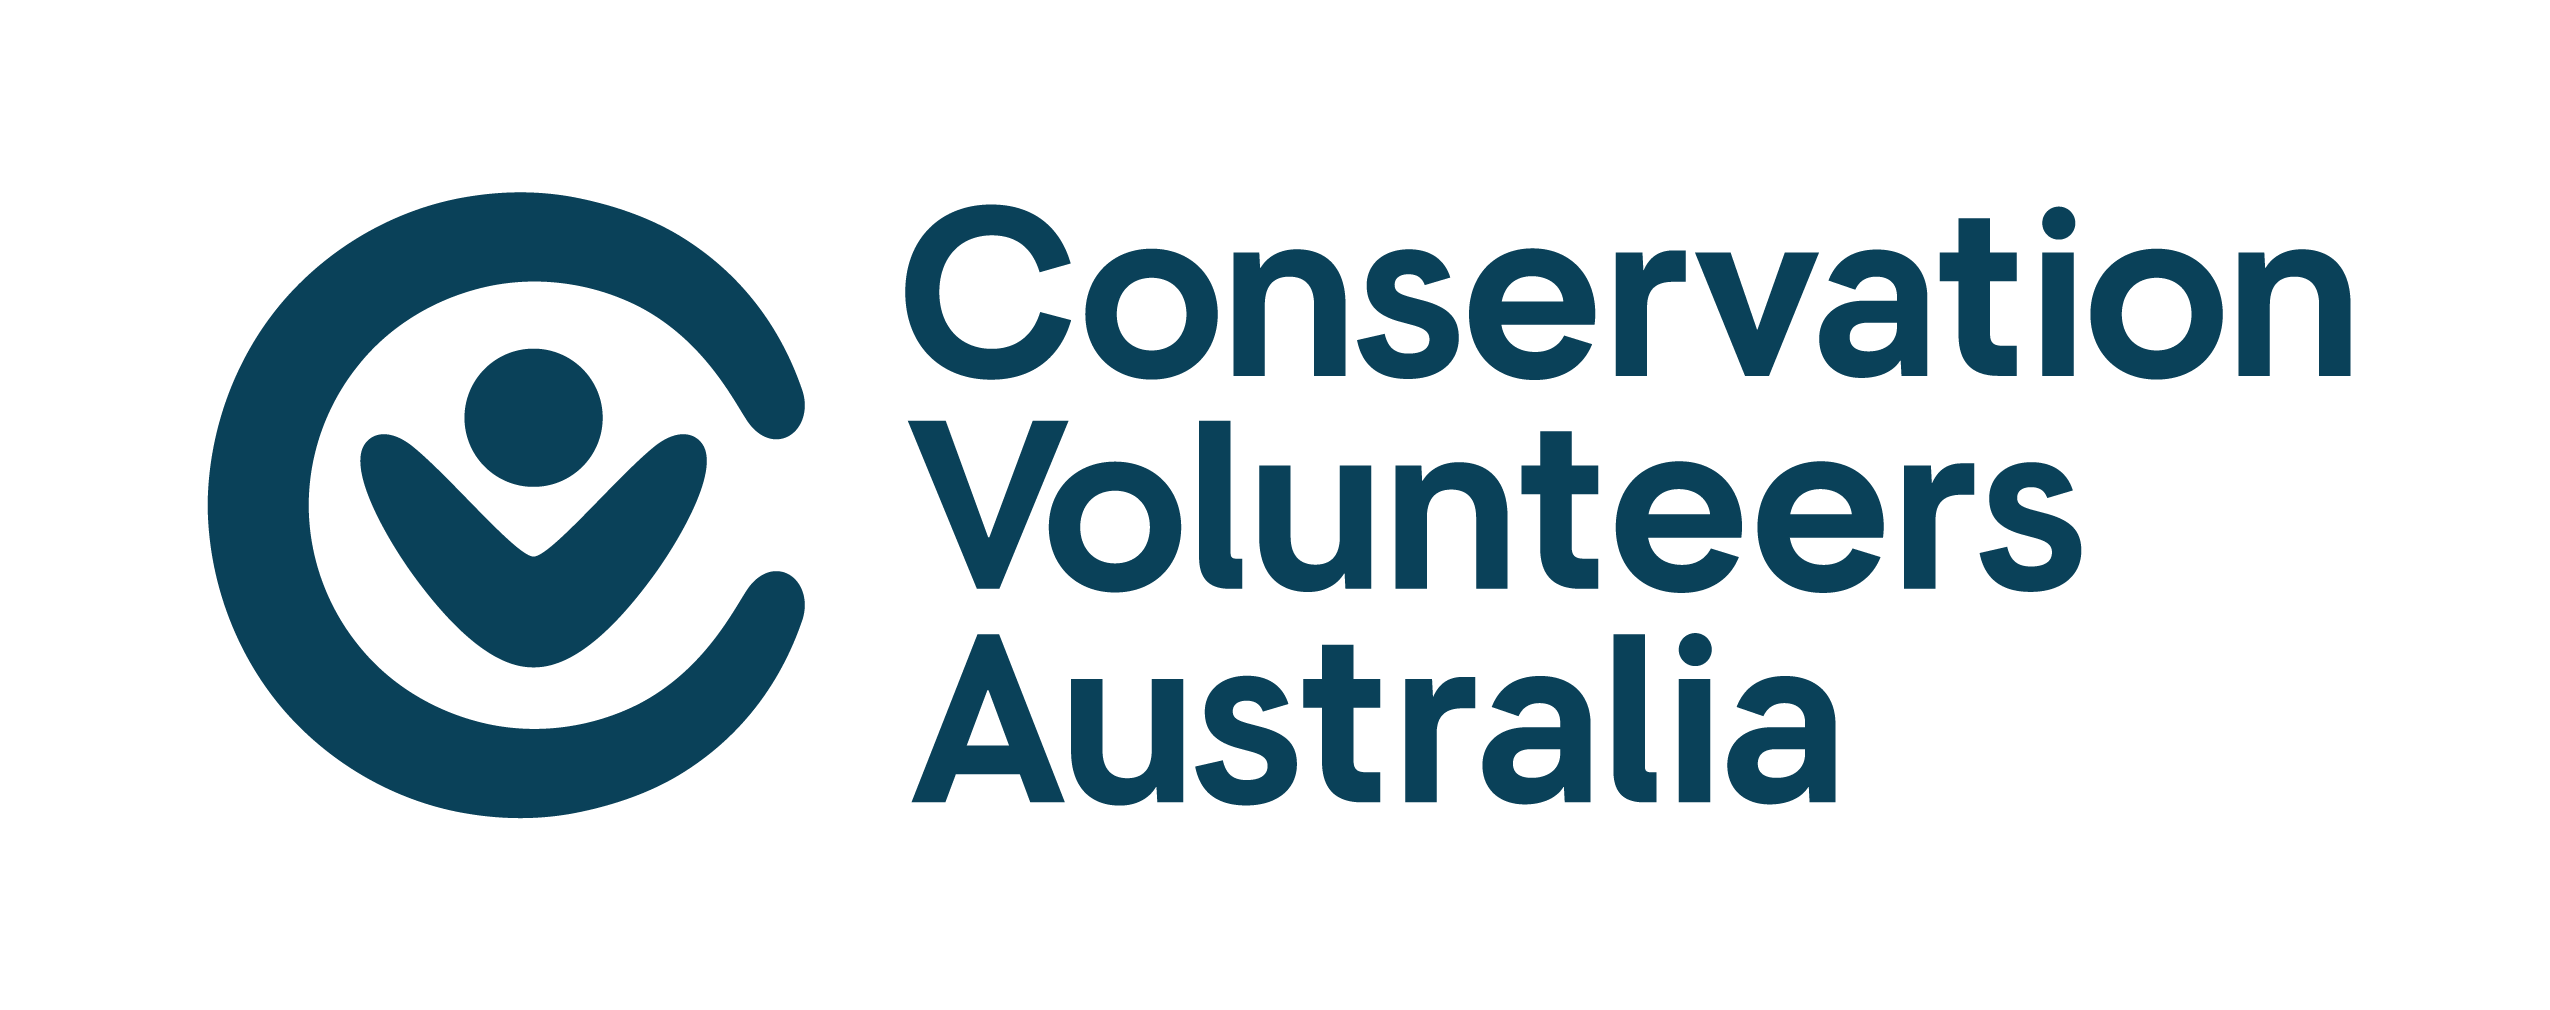 Conservation volunteers Aust - Impact x